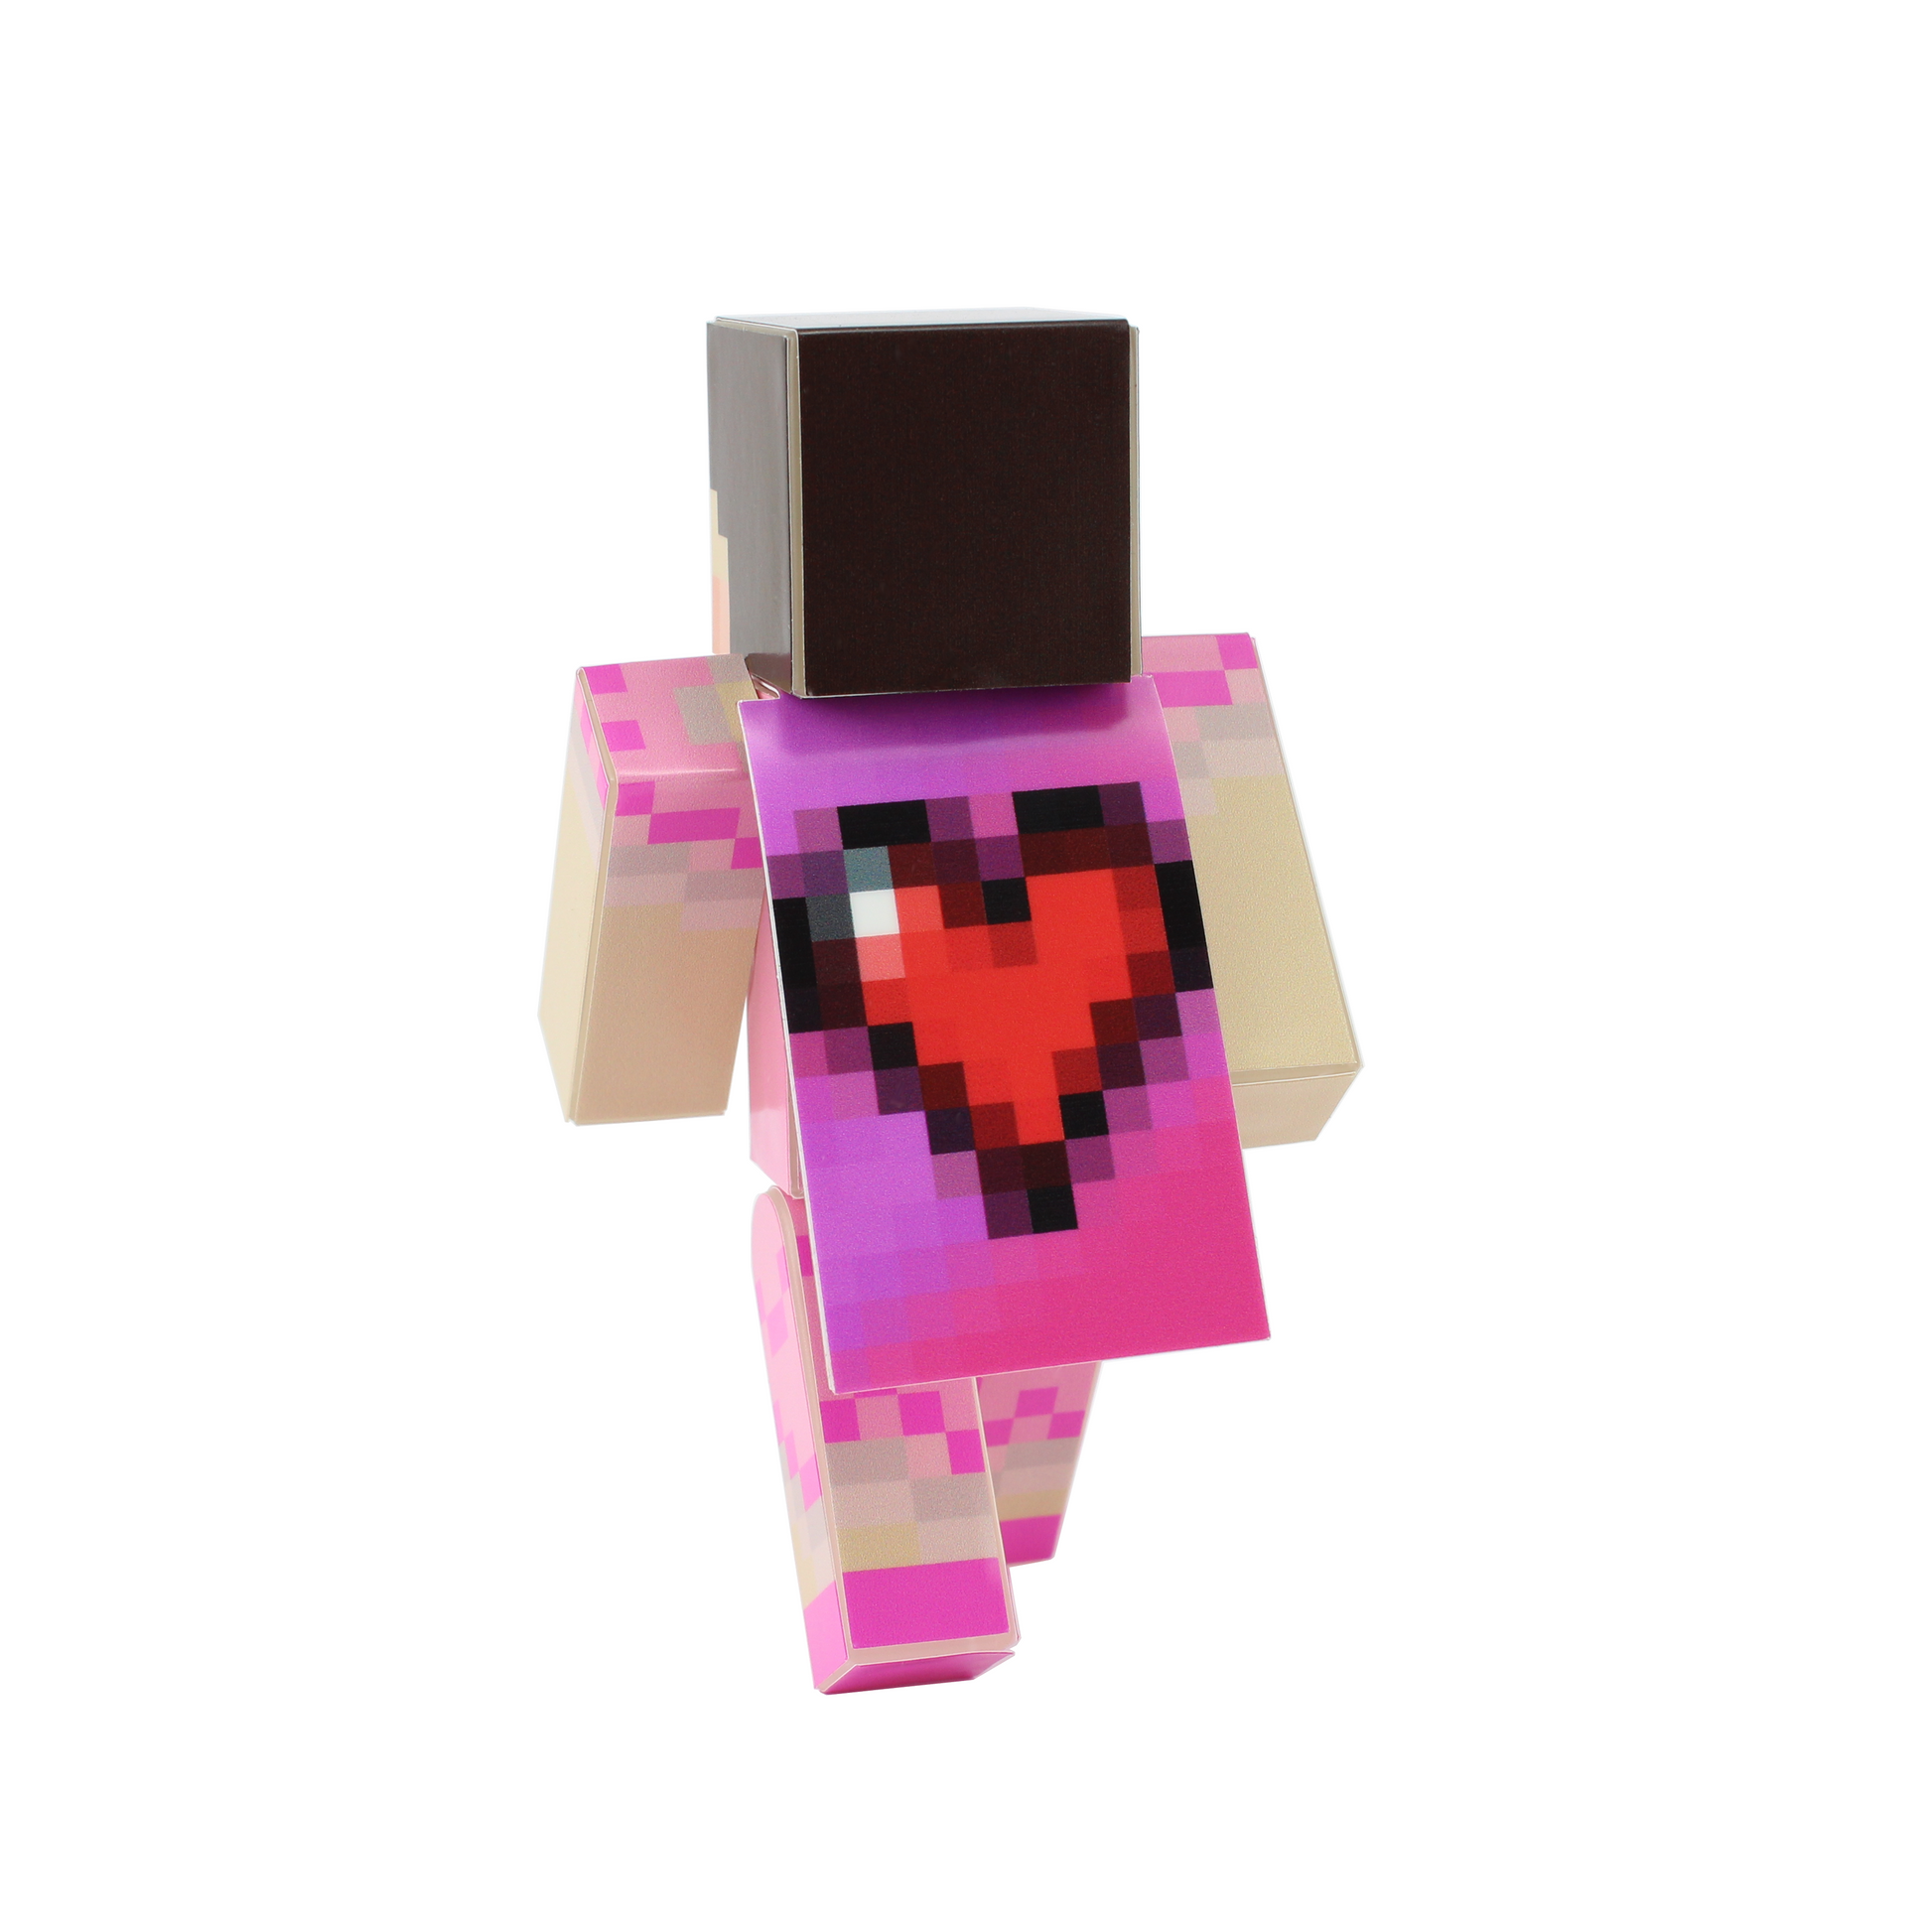 Pink creeper  Minecraft Skin